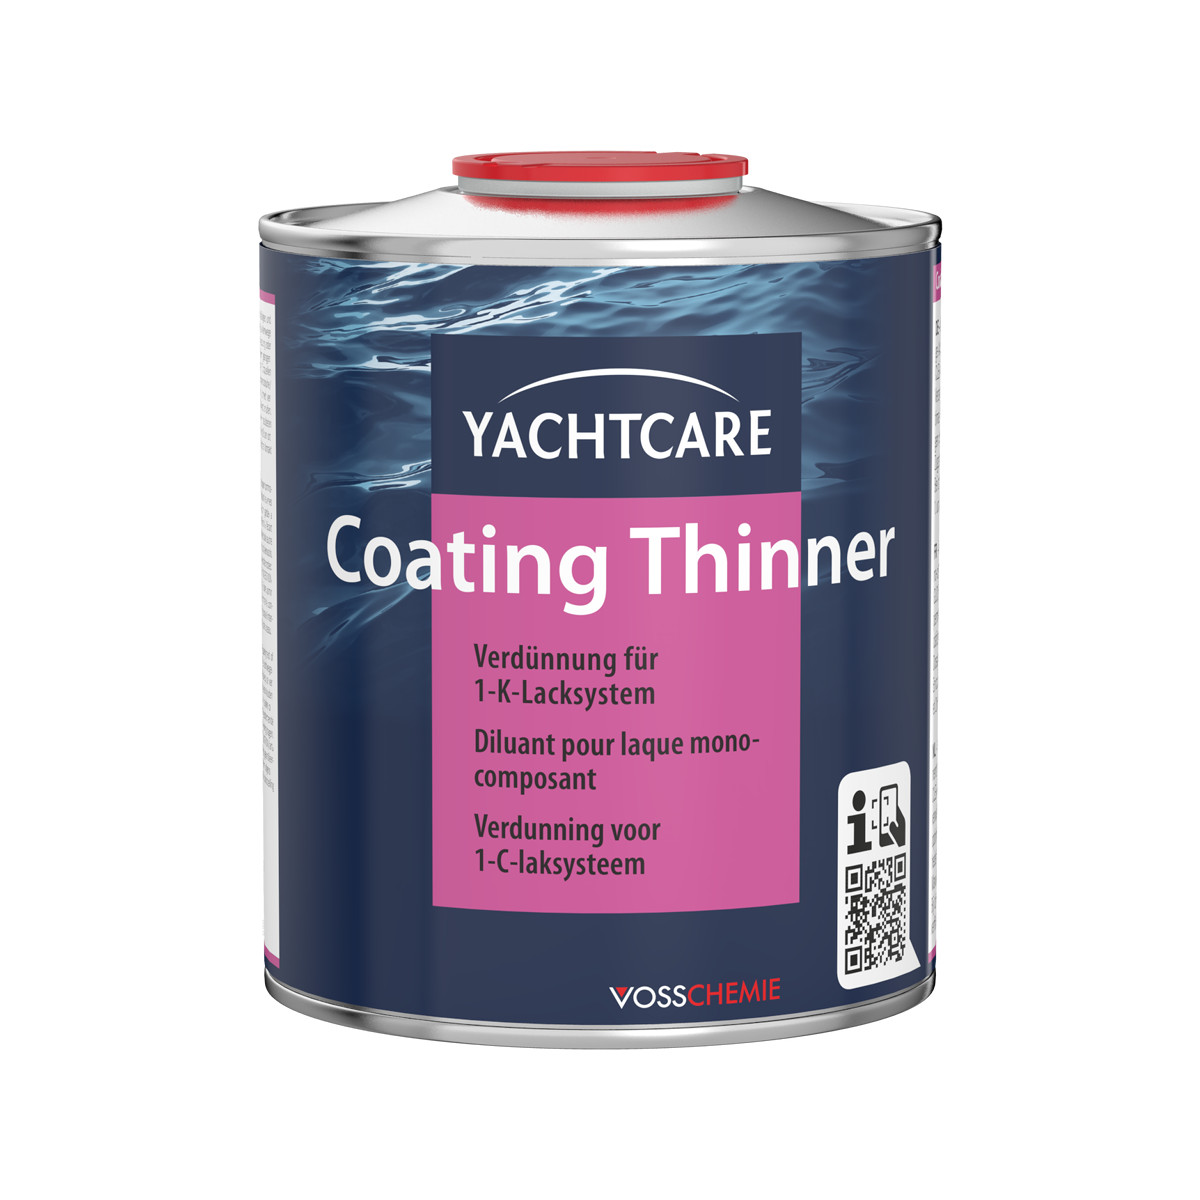 Yachtcare Coating Thinner diluant pour laque monocomposant